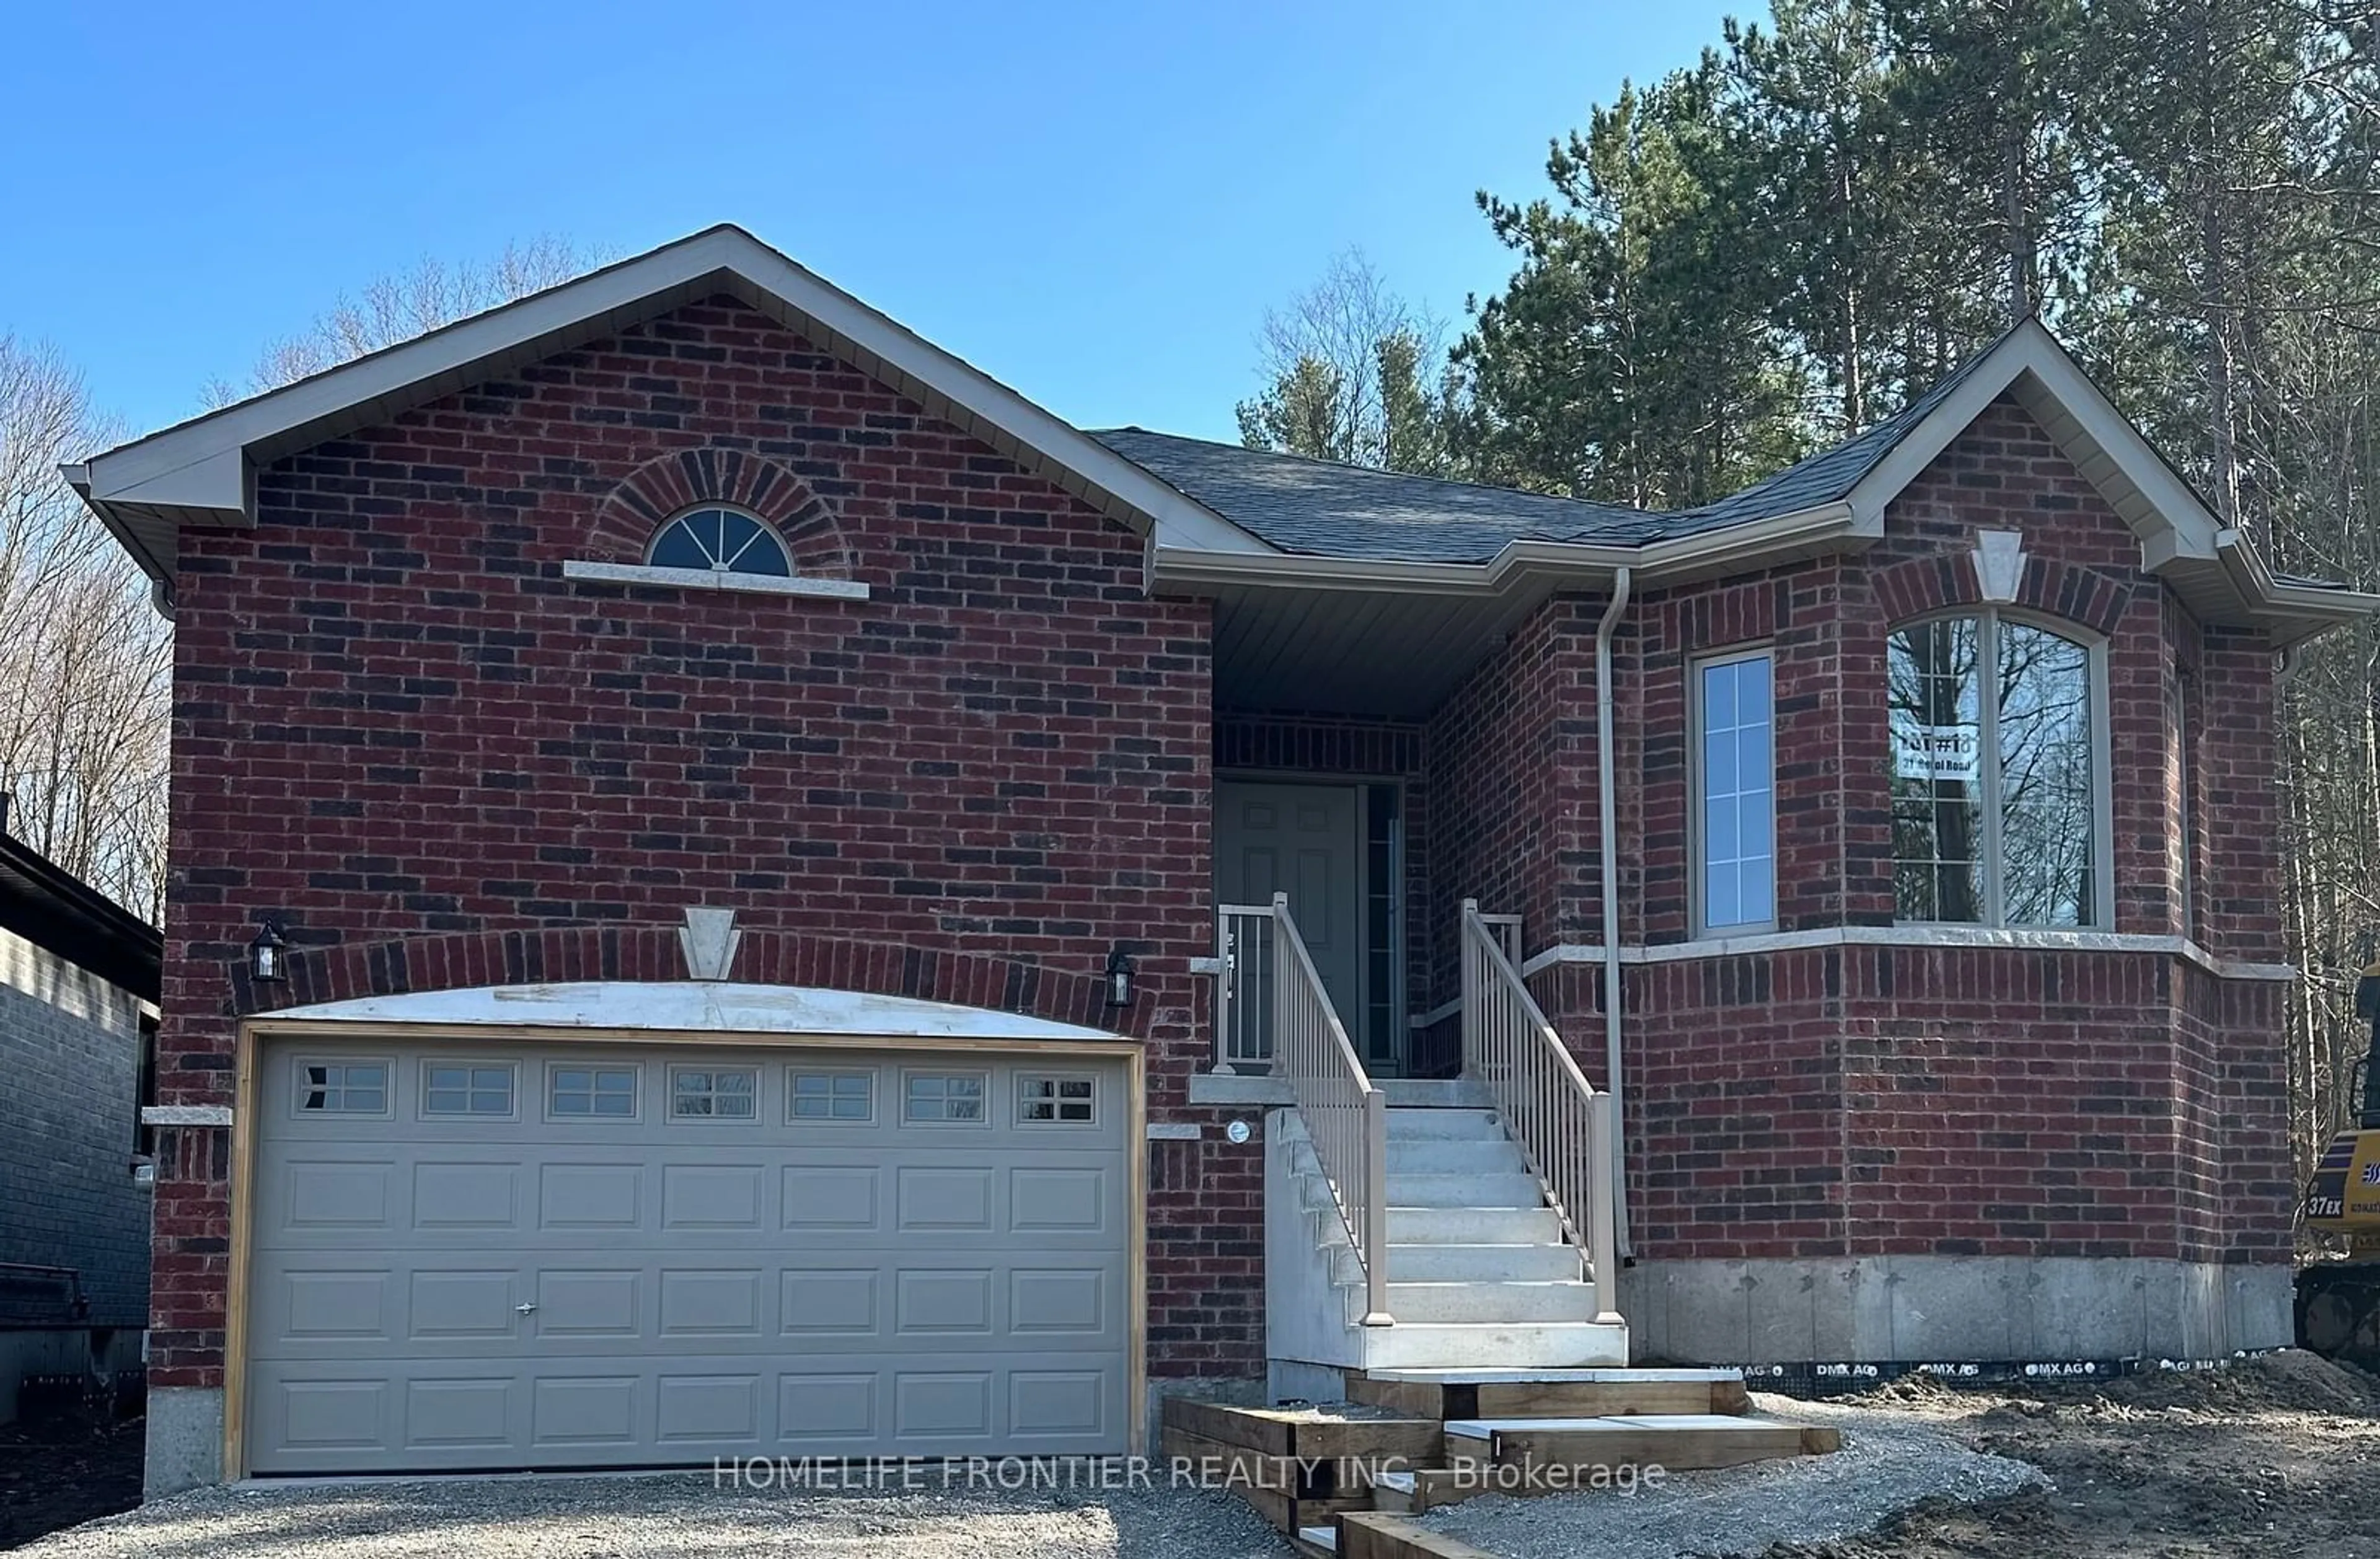 Home with brick exterior material for 31 Revol Rd, Penetanguishene Ontario L9M 1N8